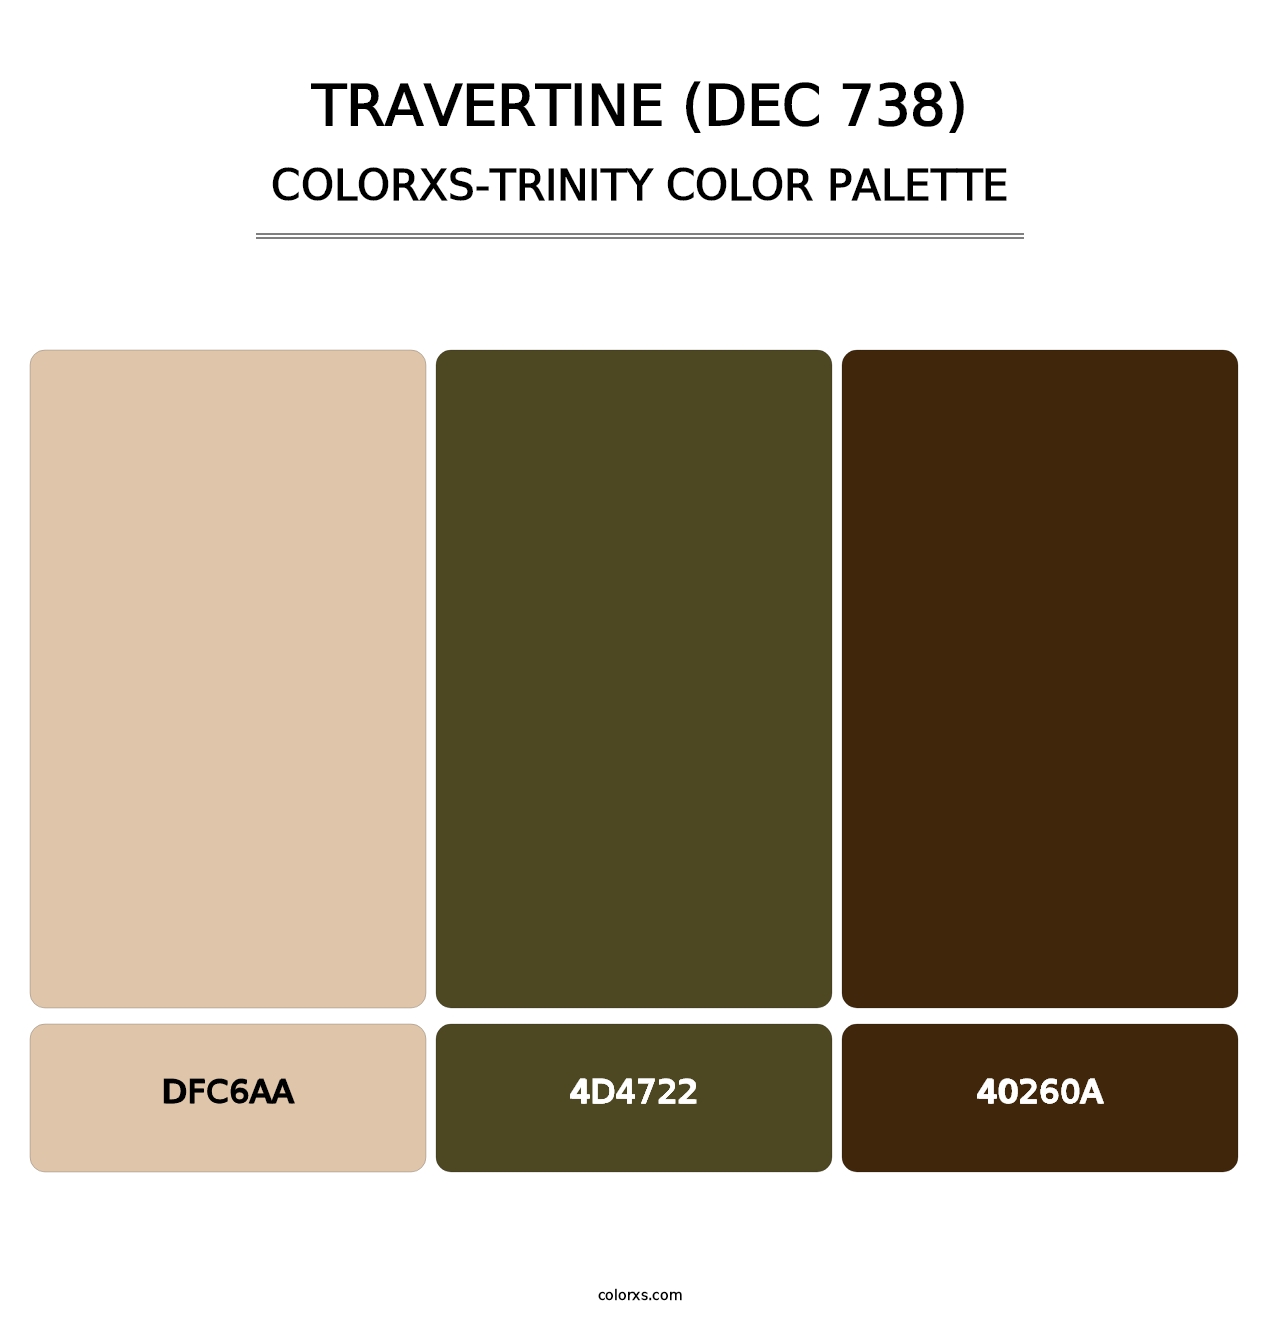 Travertine (DEC 738) - Colorxs Trinity Palette